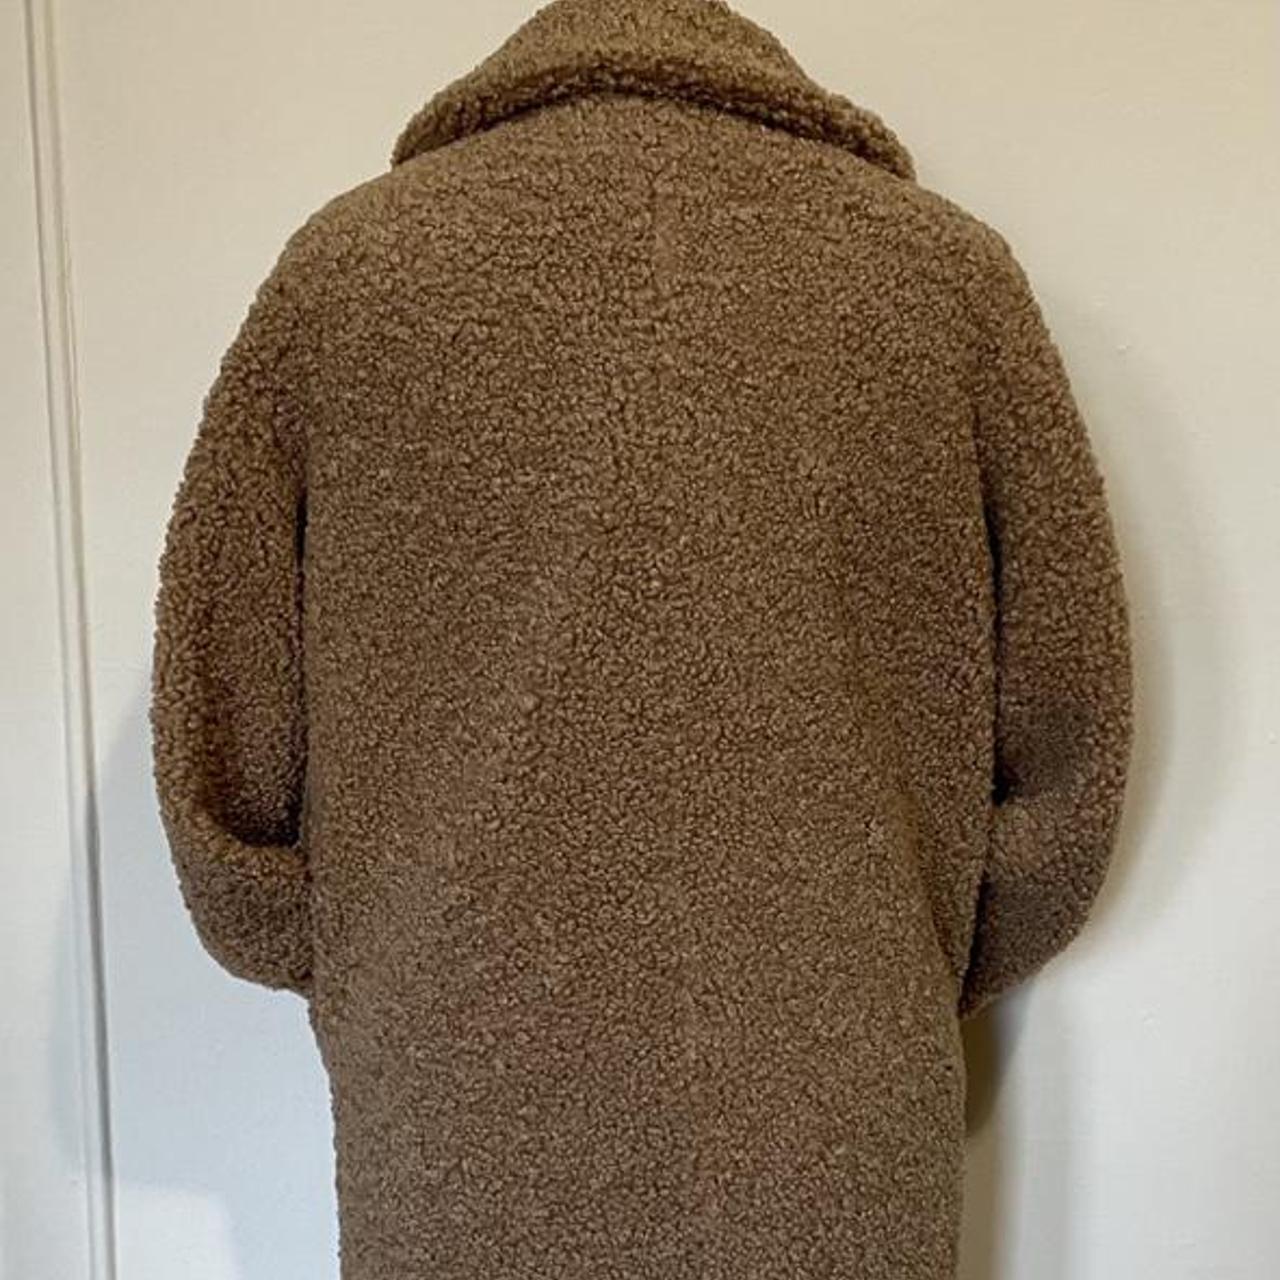 Zara chocolate teddy coat Sold out - Depop